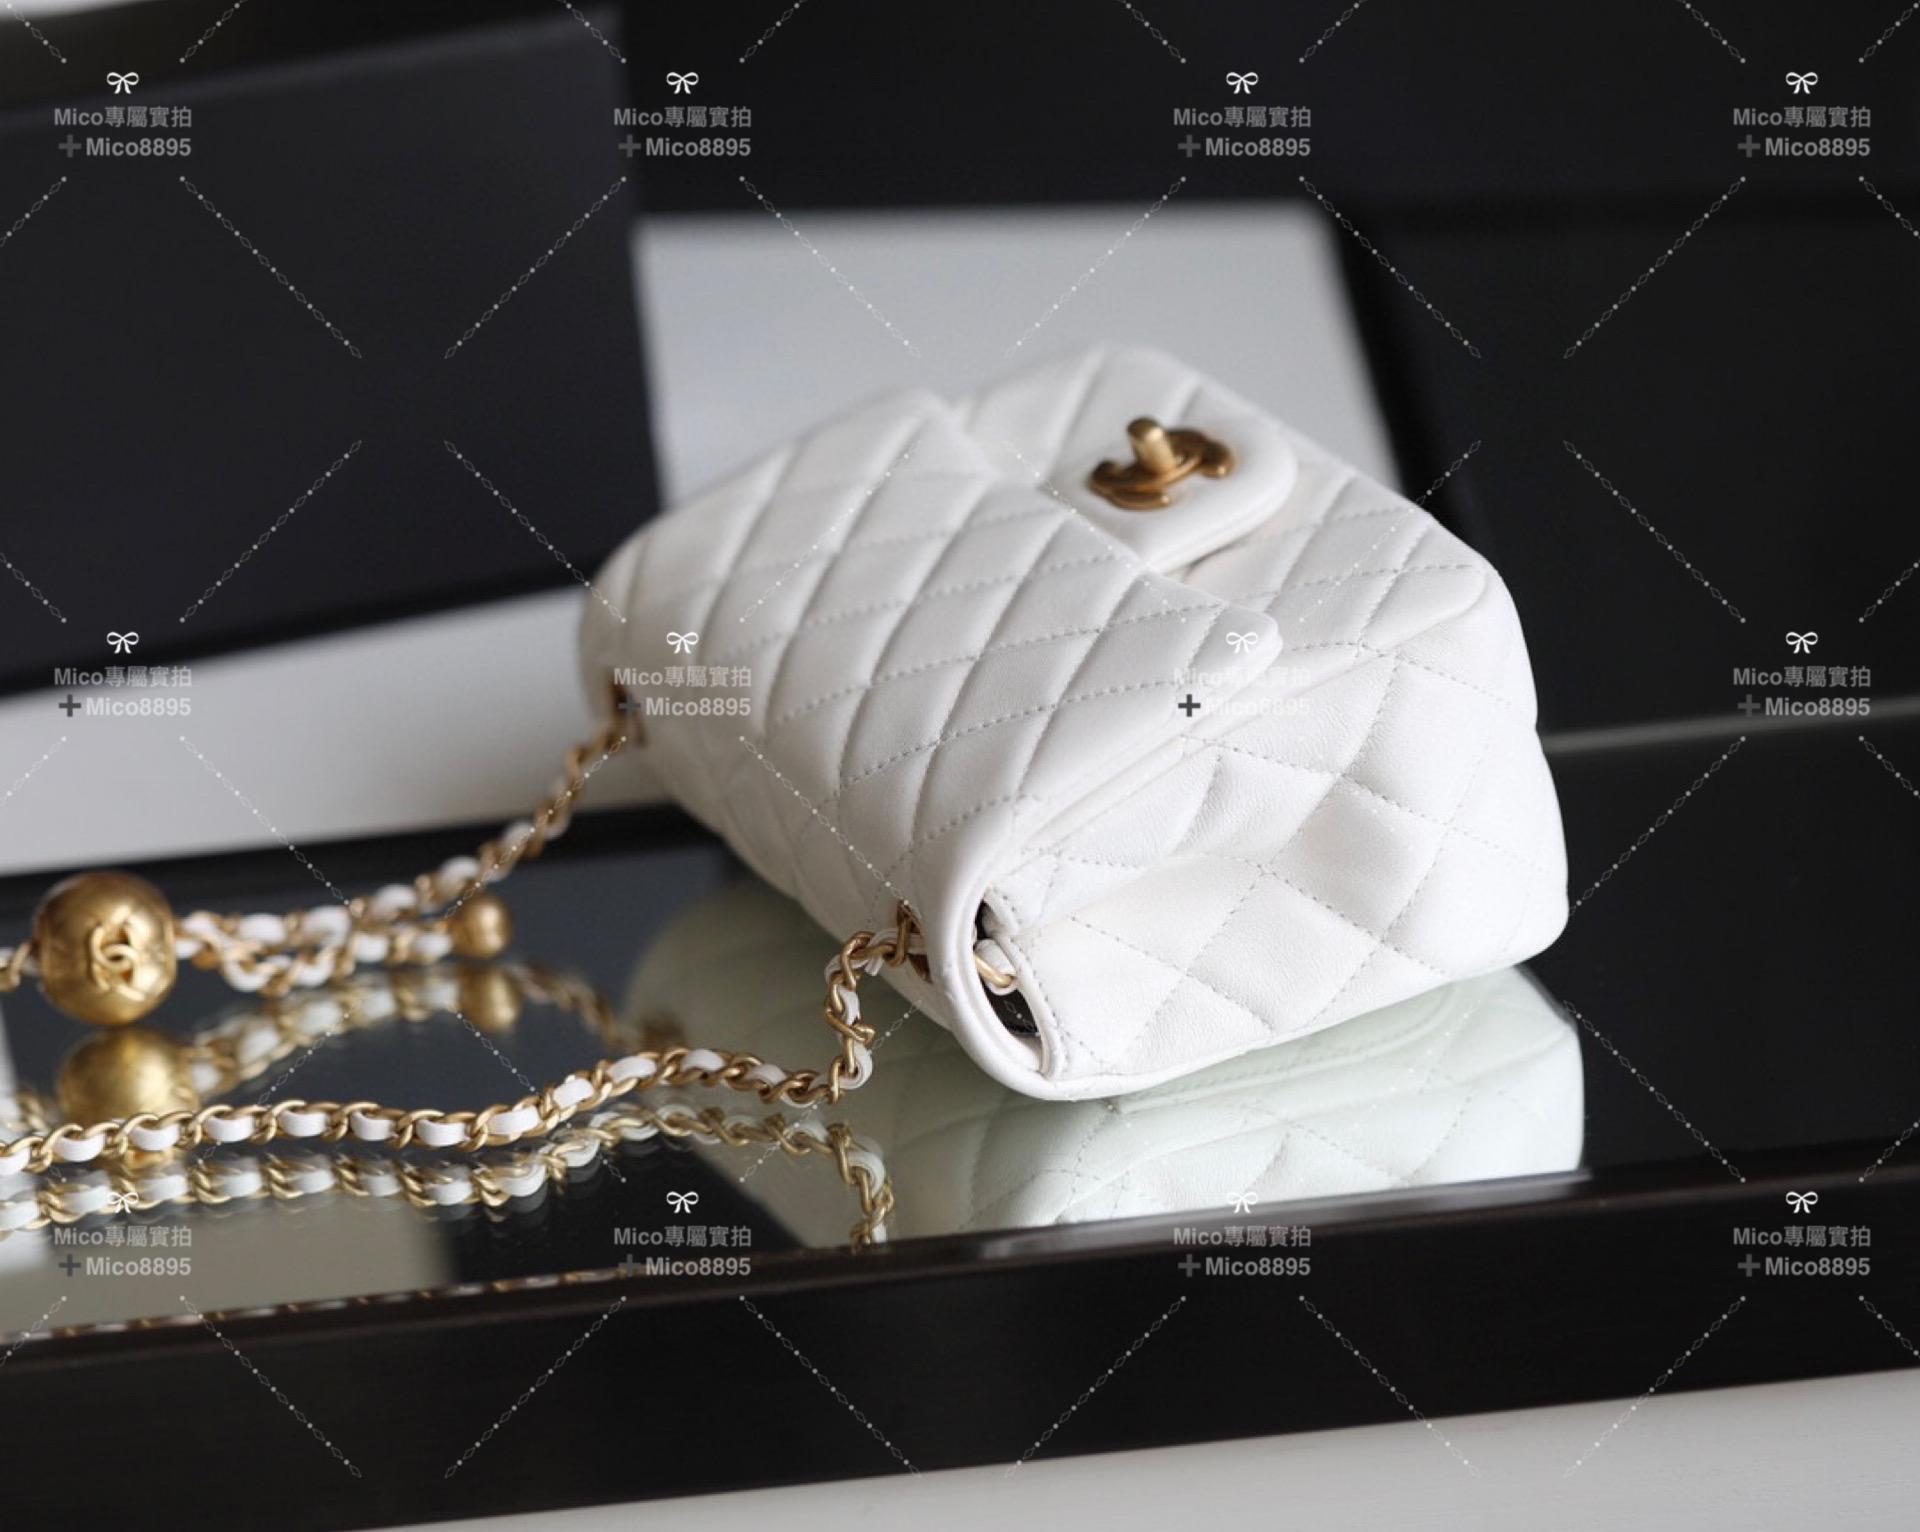 Chanel 金球系列 白色小羊皮口蓋包 進化Classic Flap革新演繹  𝐦𝐢𝐧𝐢 𝐜𝐟方胖子外觀 18cm